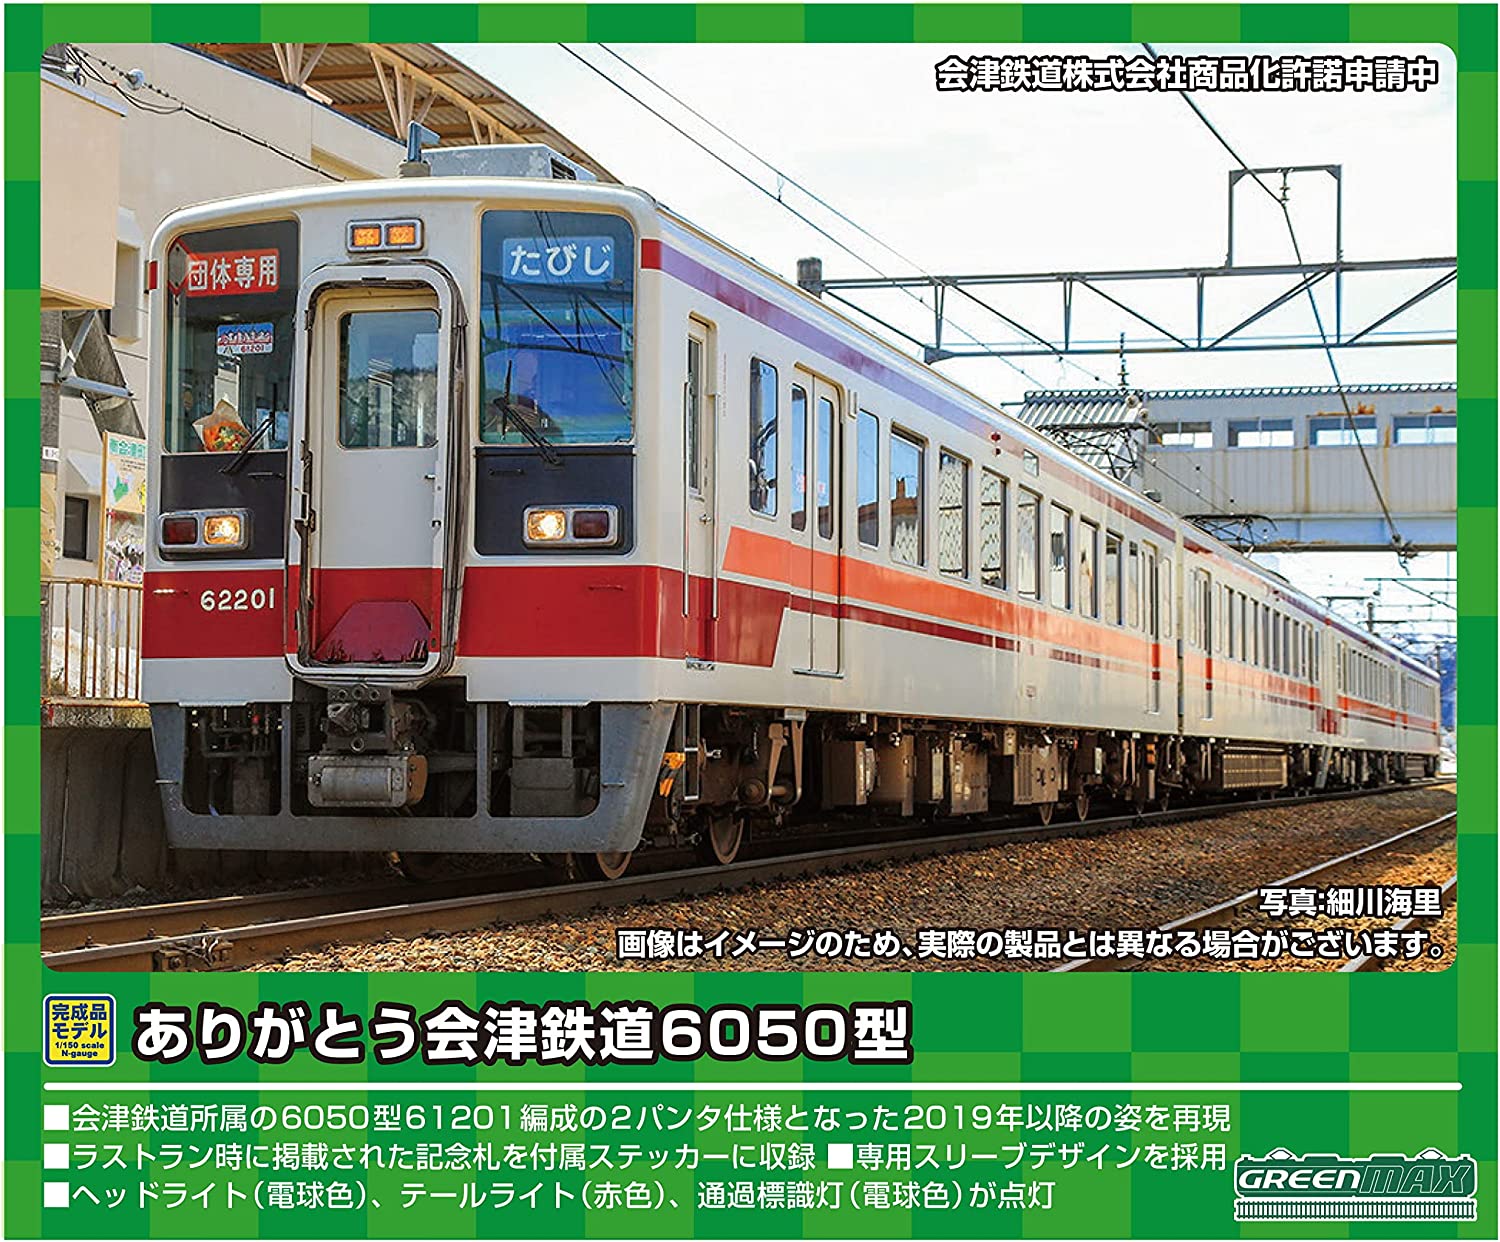 50723 Thank You Aizu Railway Type 6050 Two Car Formation Set (w/